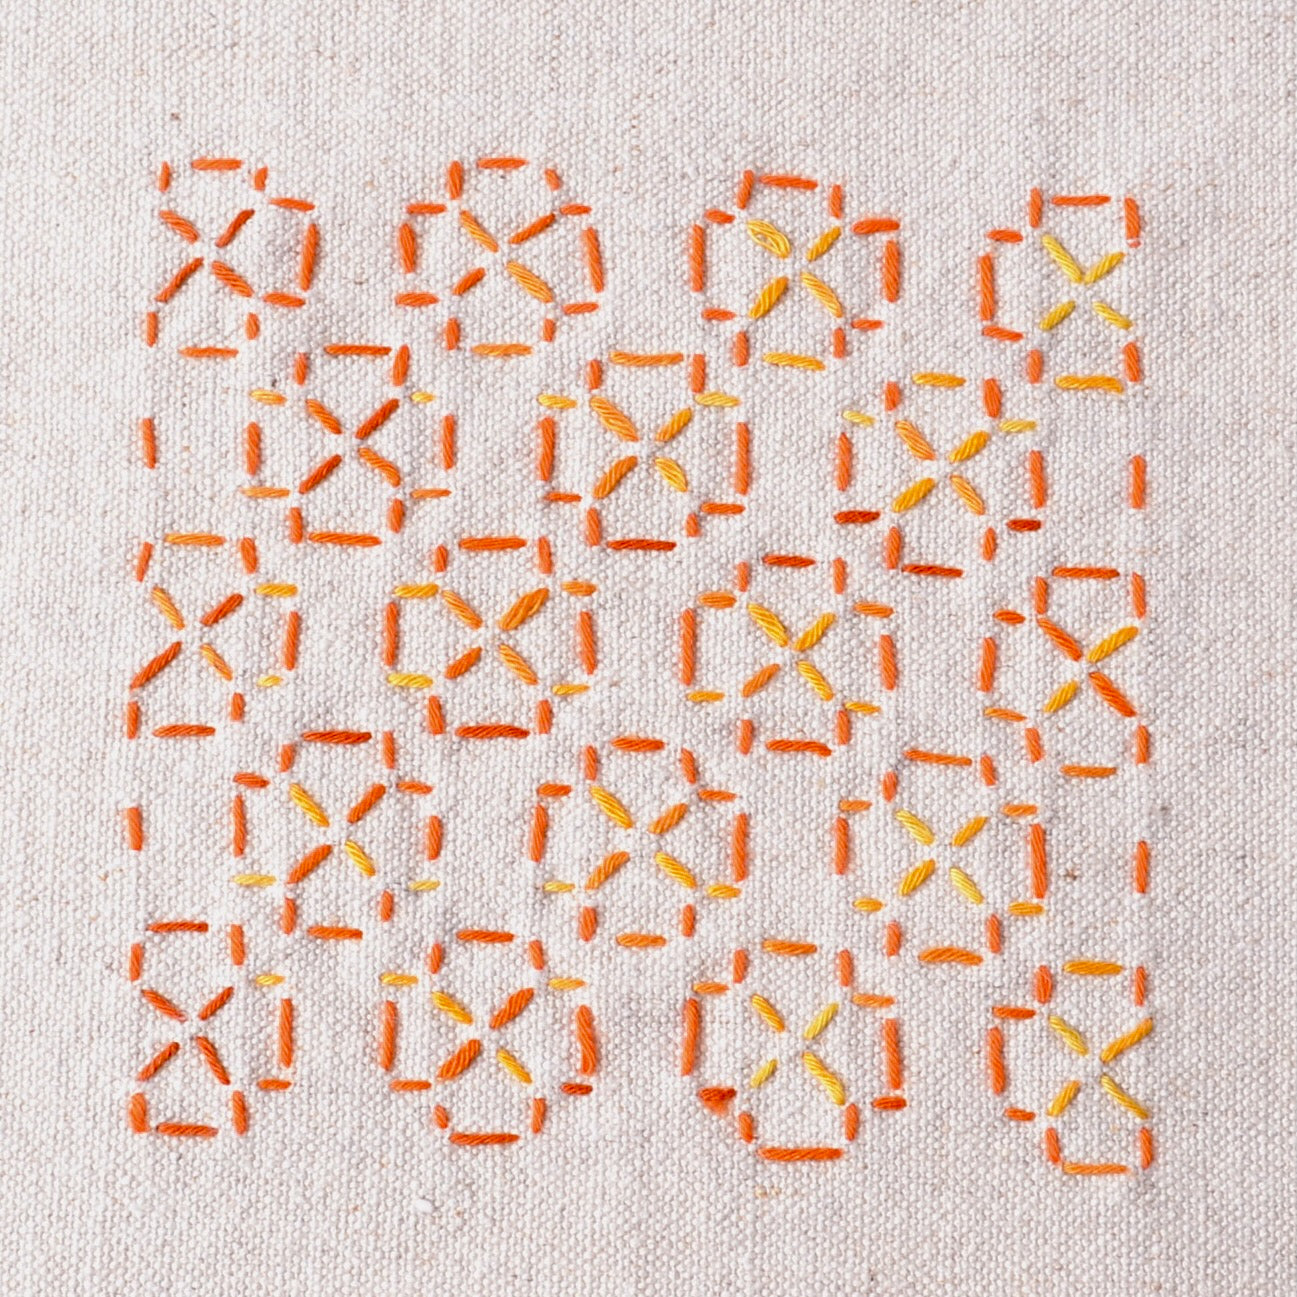 Sashiko stitching from a stenciled design